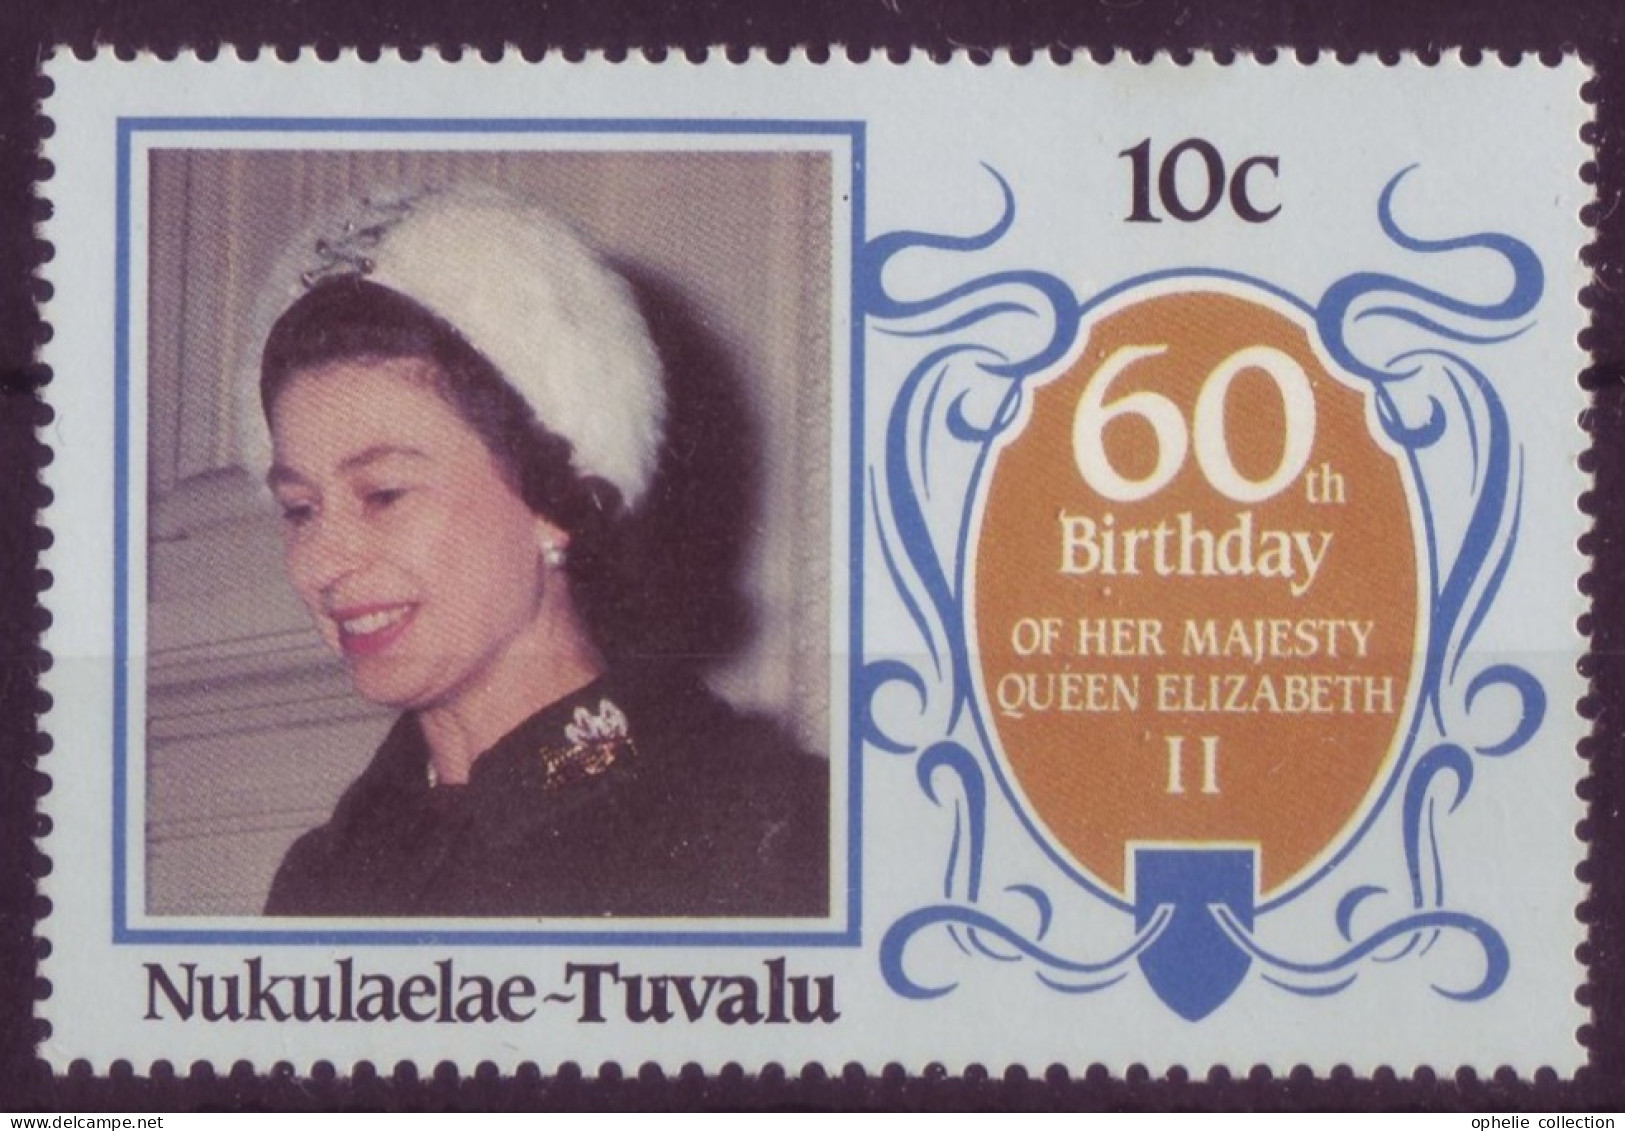 Océanie - Tuvalu - Nukulaelae - 60th Birthday Of Her Majesty Queen Elisabeth II  - 7337 - Tuvalu